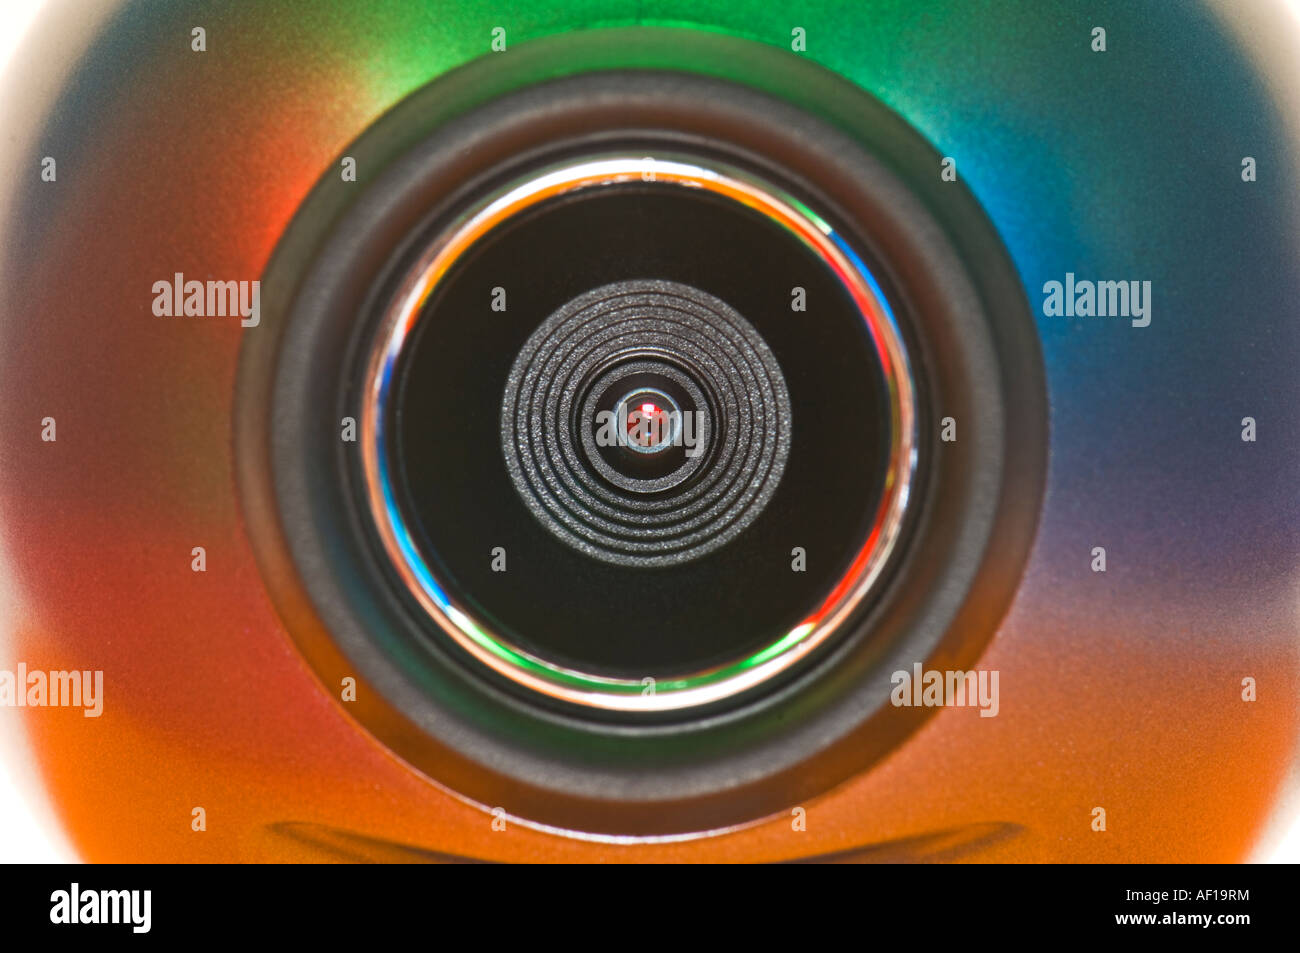 Cámara webcam kamera cam lente ojo cortado spy Fotografía de stock - Alamy